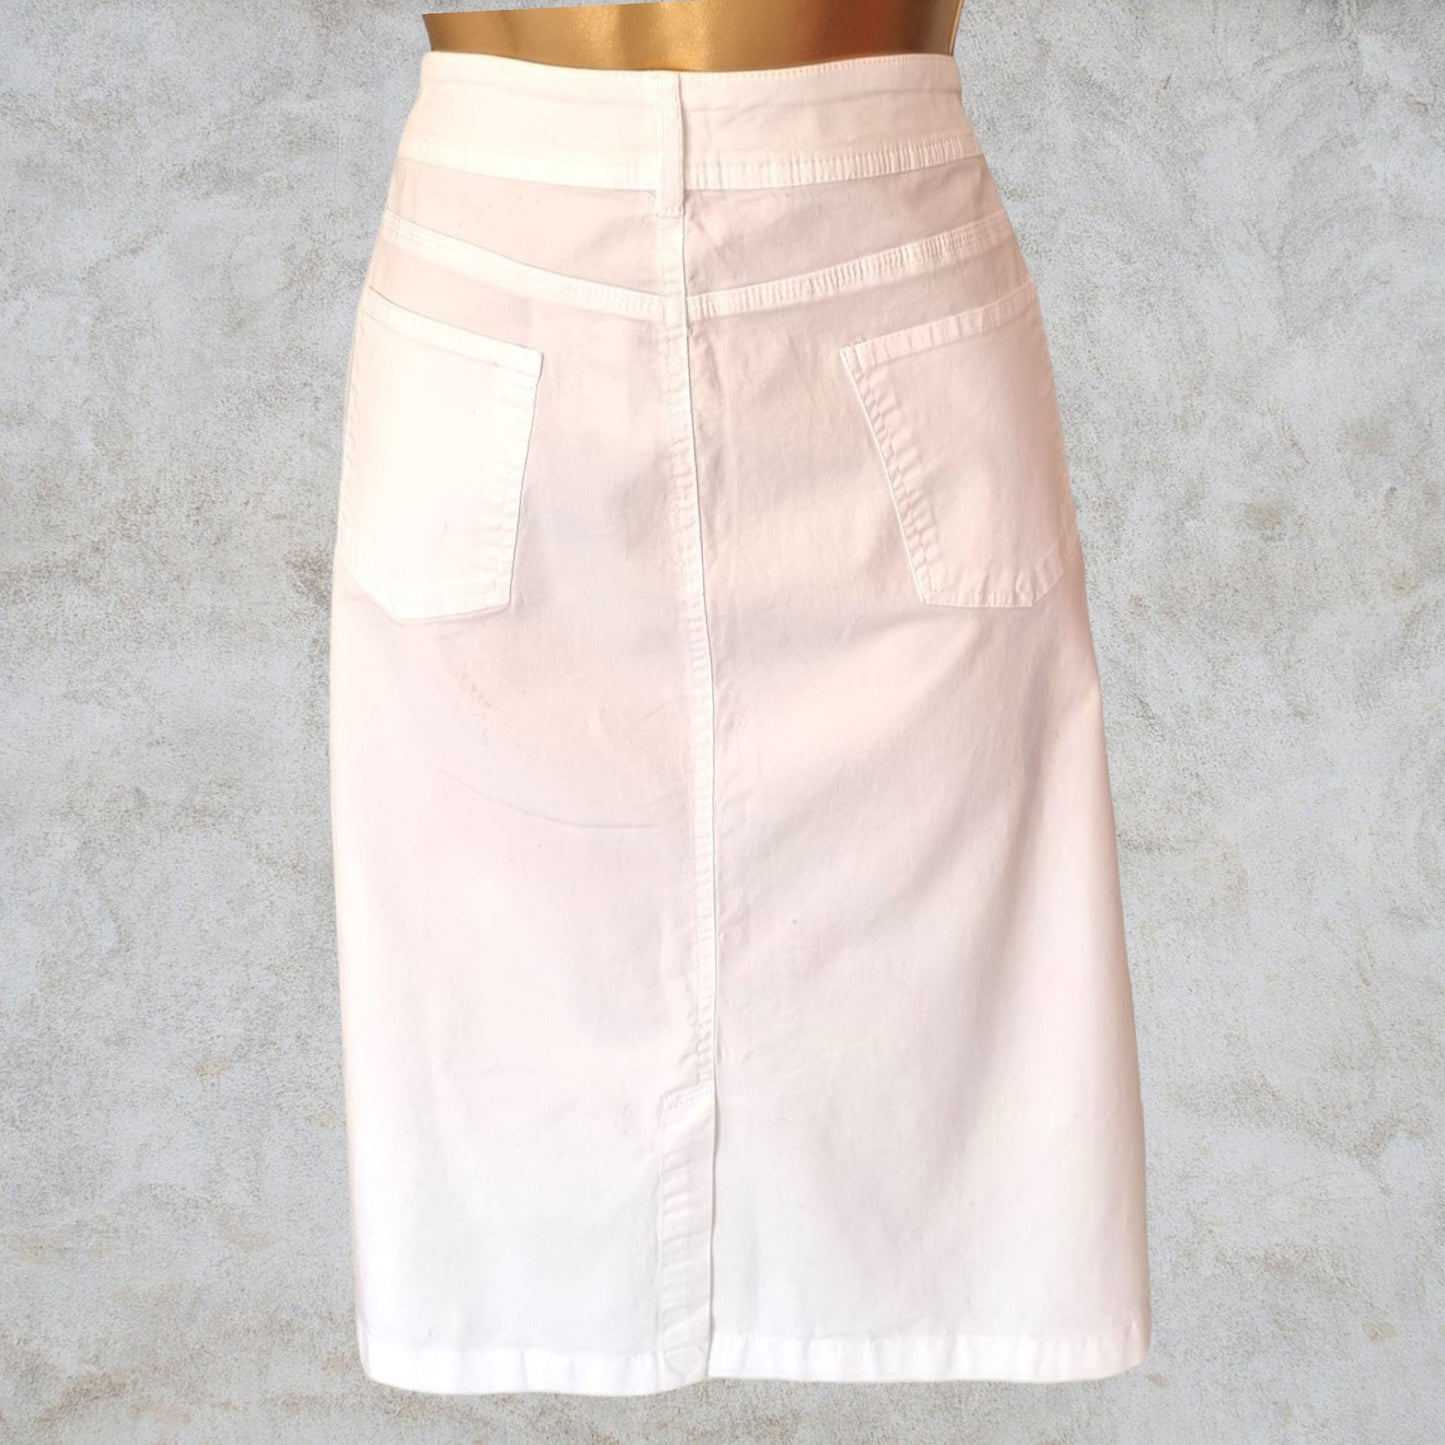 Pomodoro Women's White Stretch Cotton Skirt UK 18 US 14 EU 46 Timeless Fashions